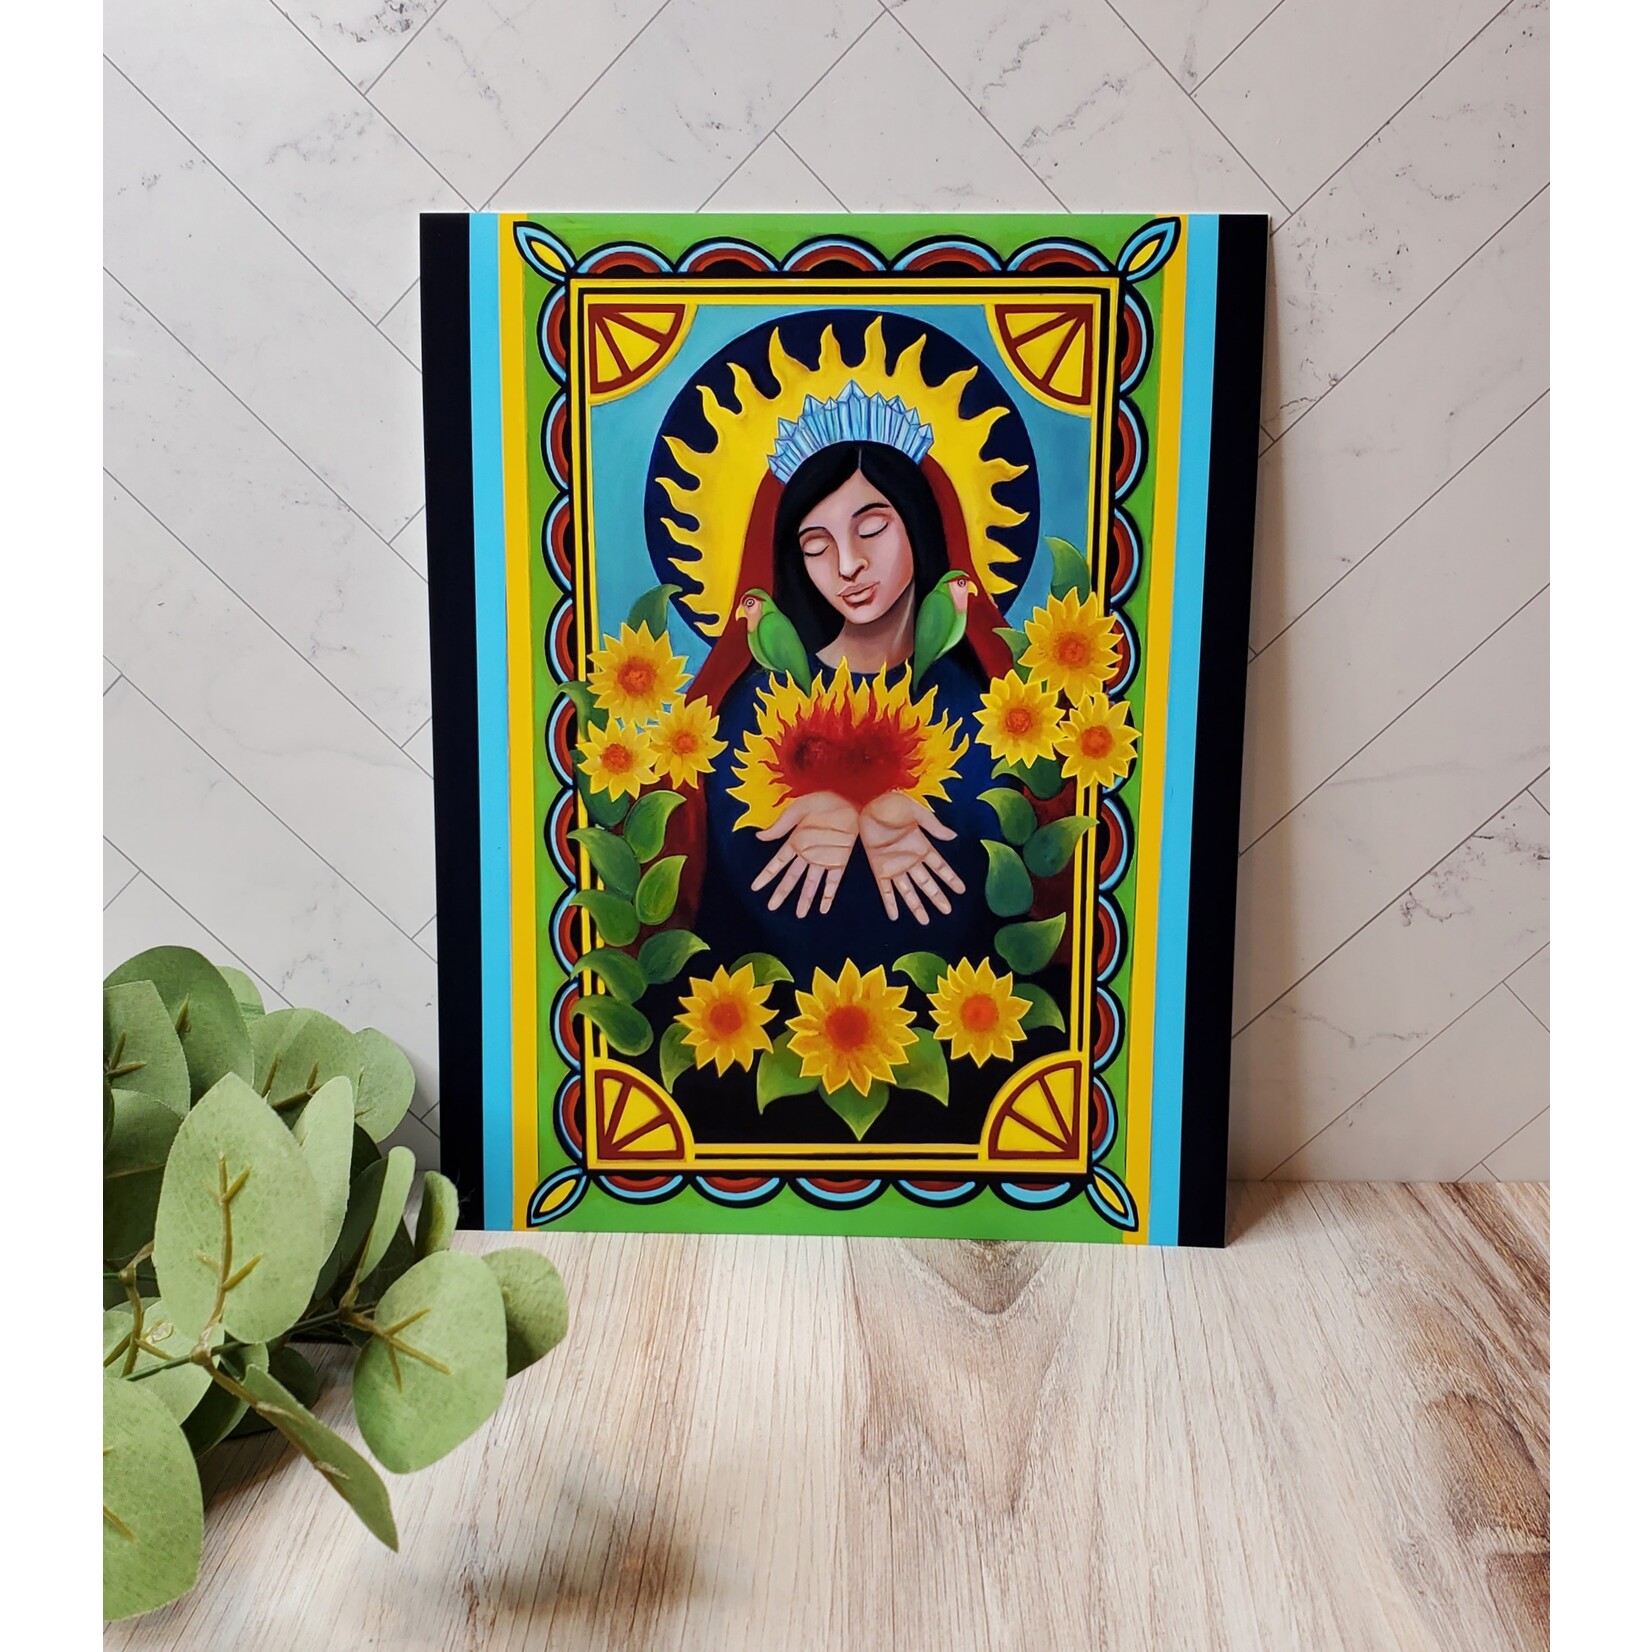 Asja Dawn "Sunflower Saint" - 8x10